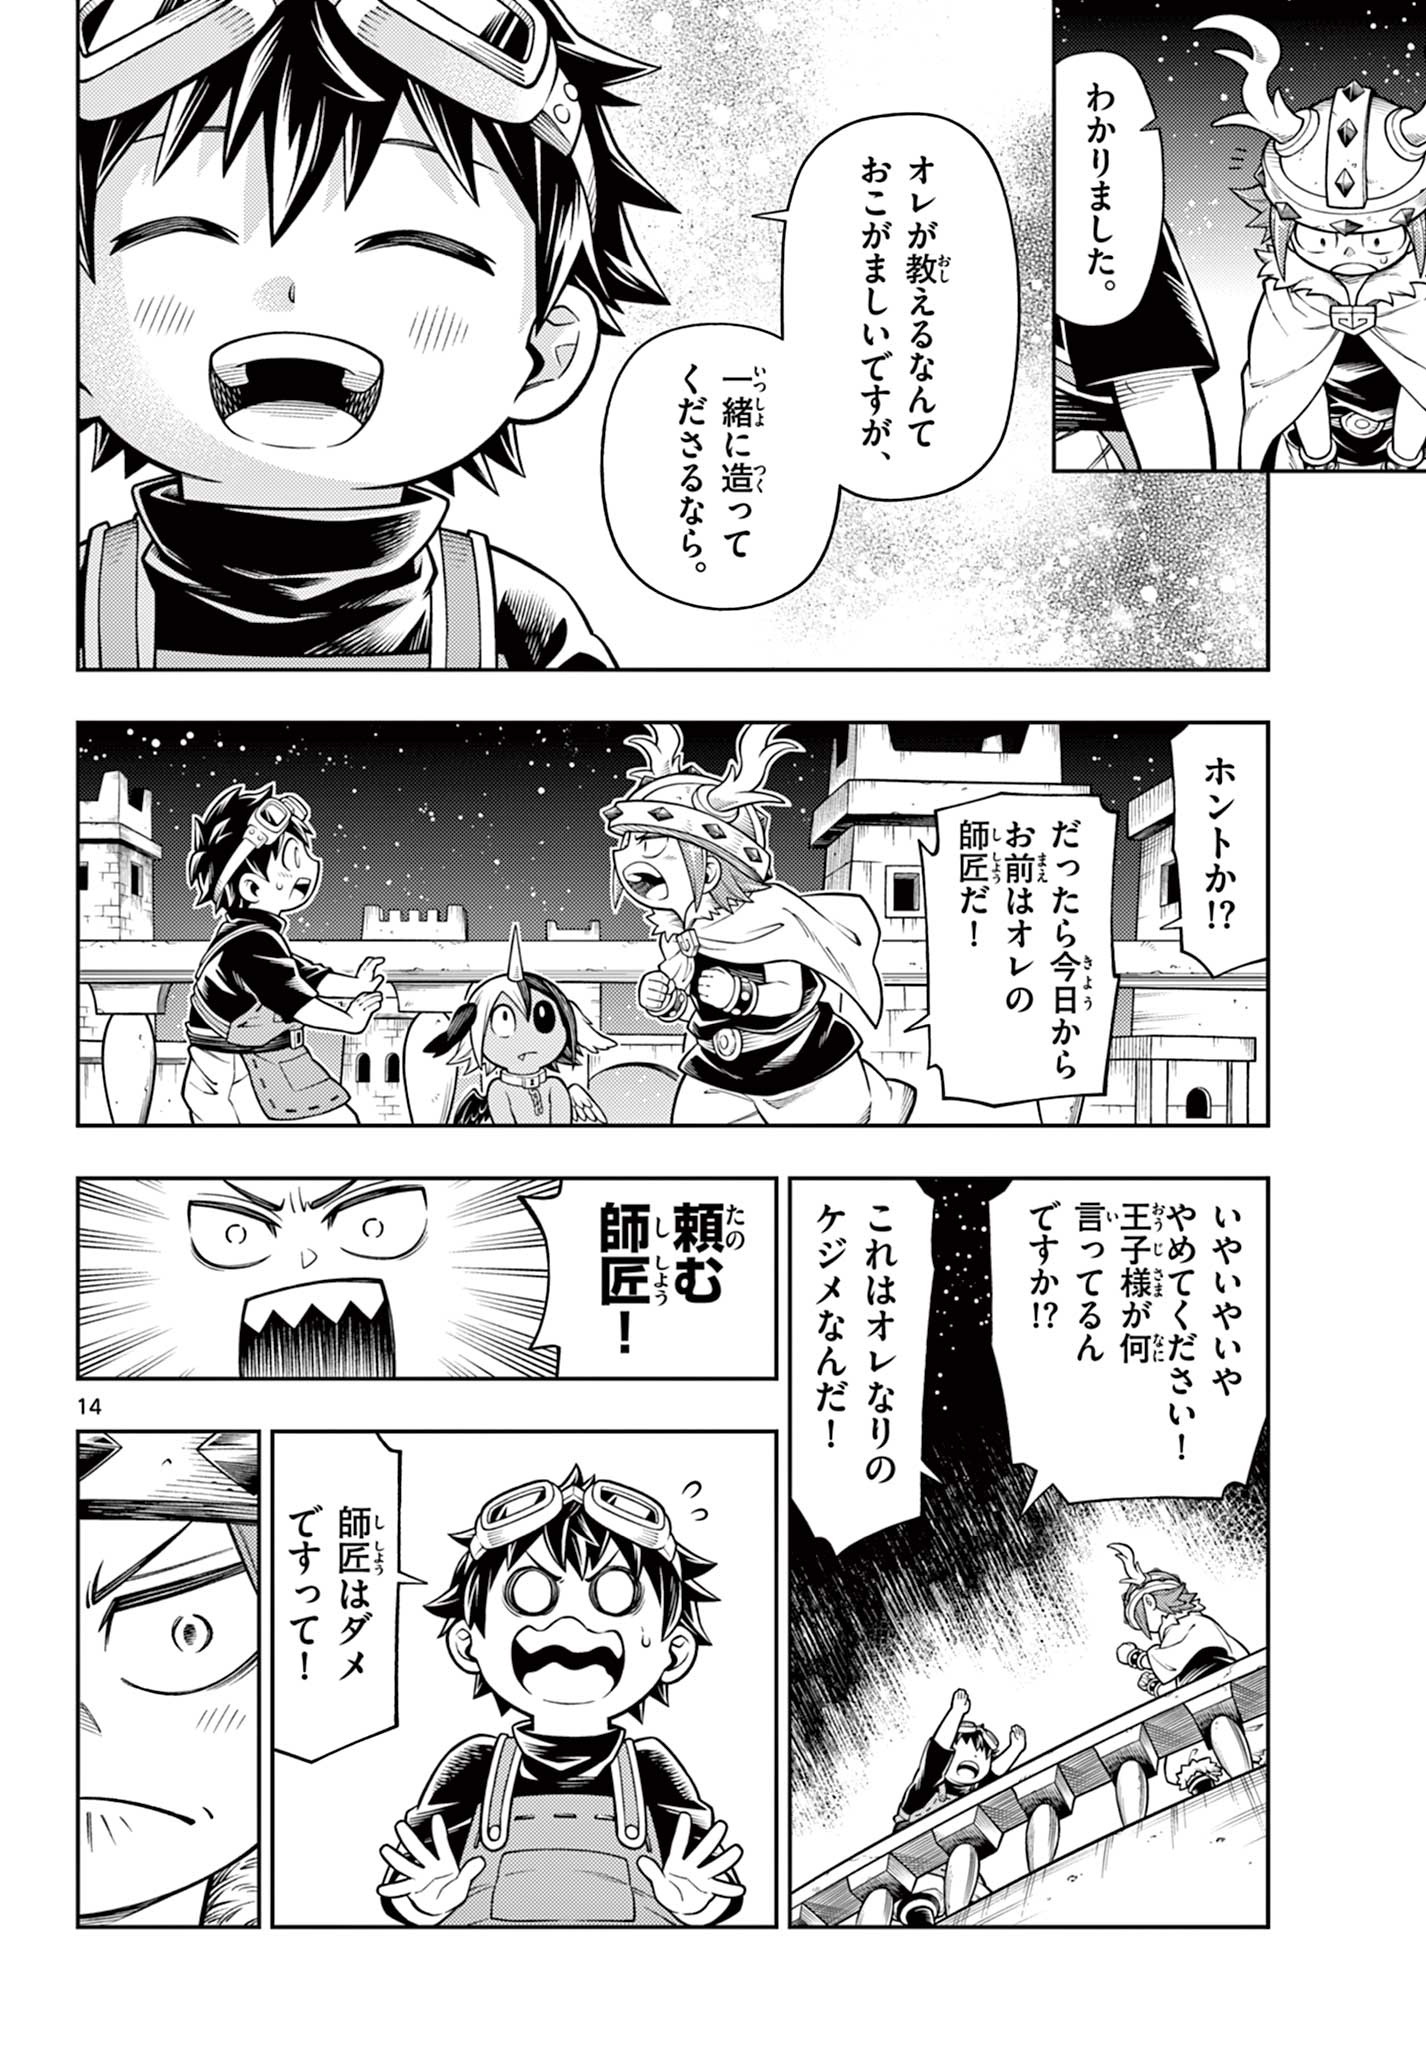 Soara to Mamono no ie - Chapter 26 - Page 14